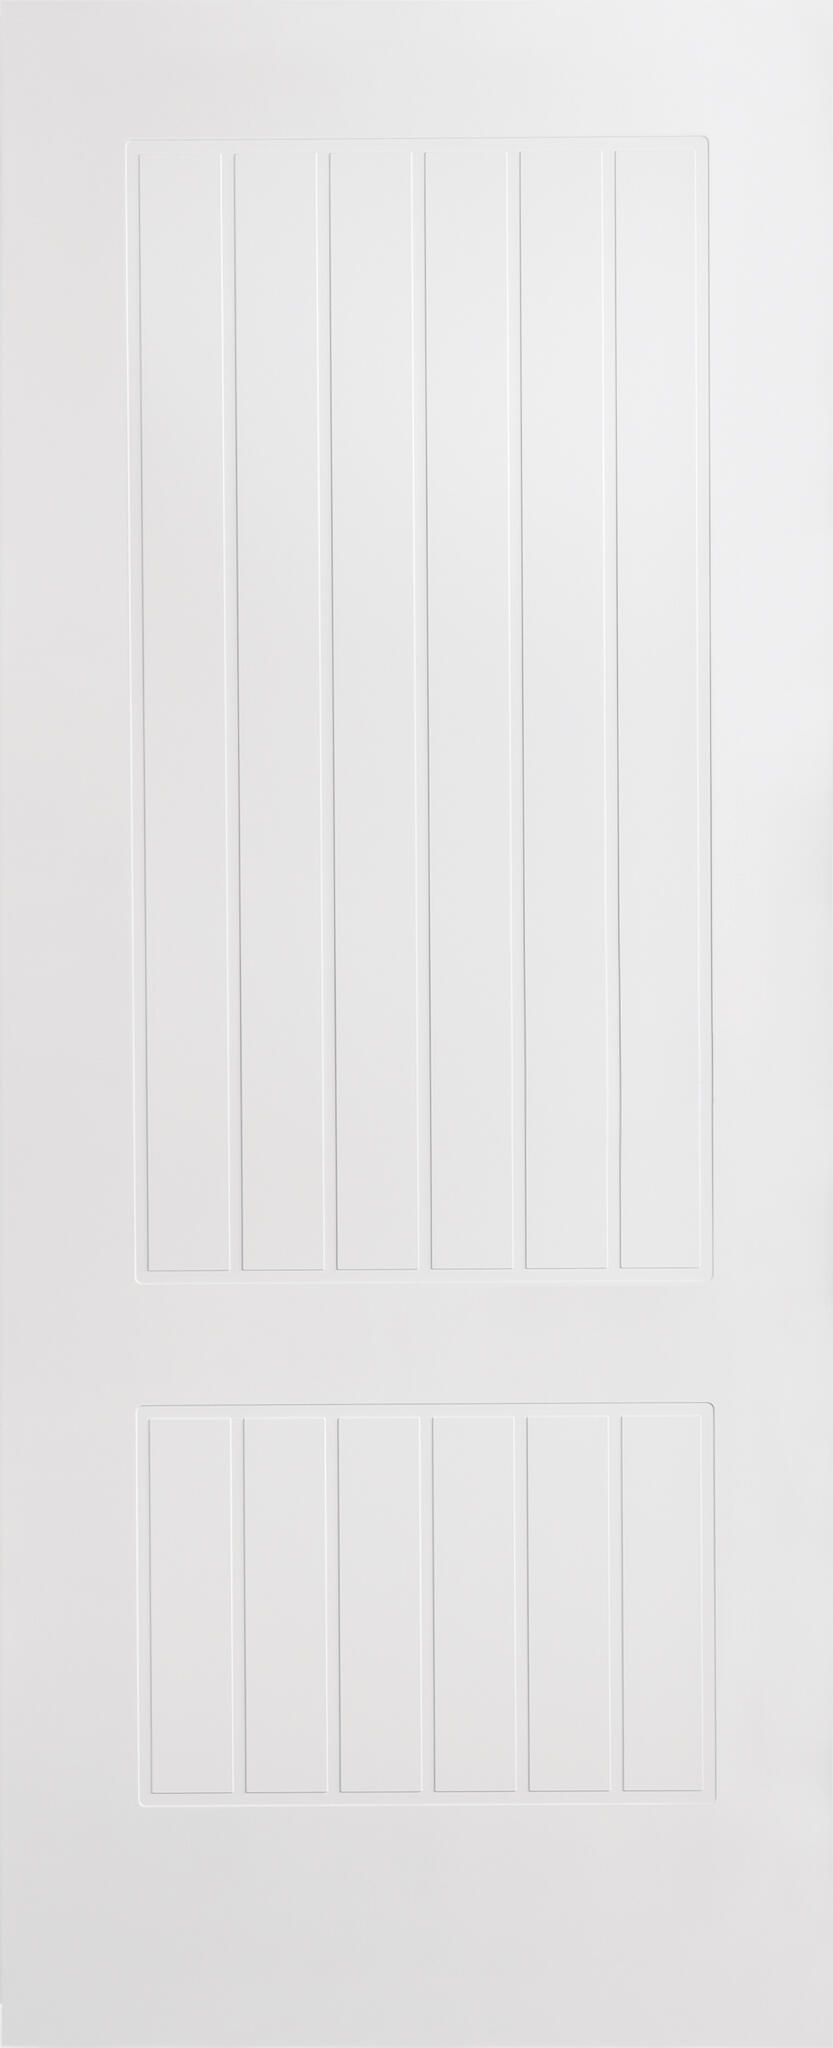 Panel de puerta blindada madison de 83.5x204 cm de la marca ARTENS